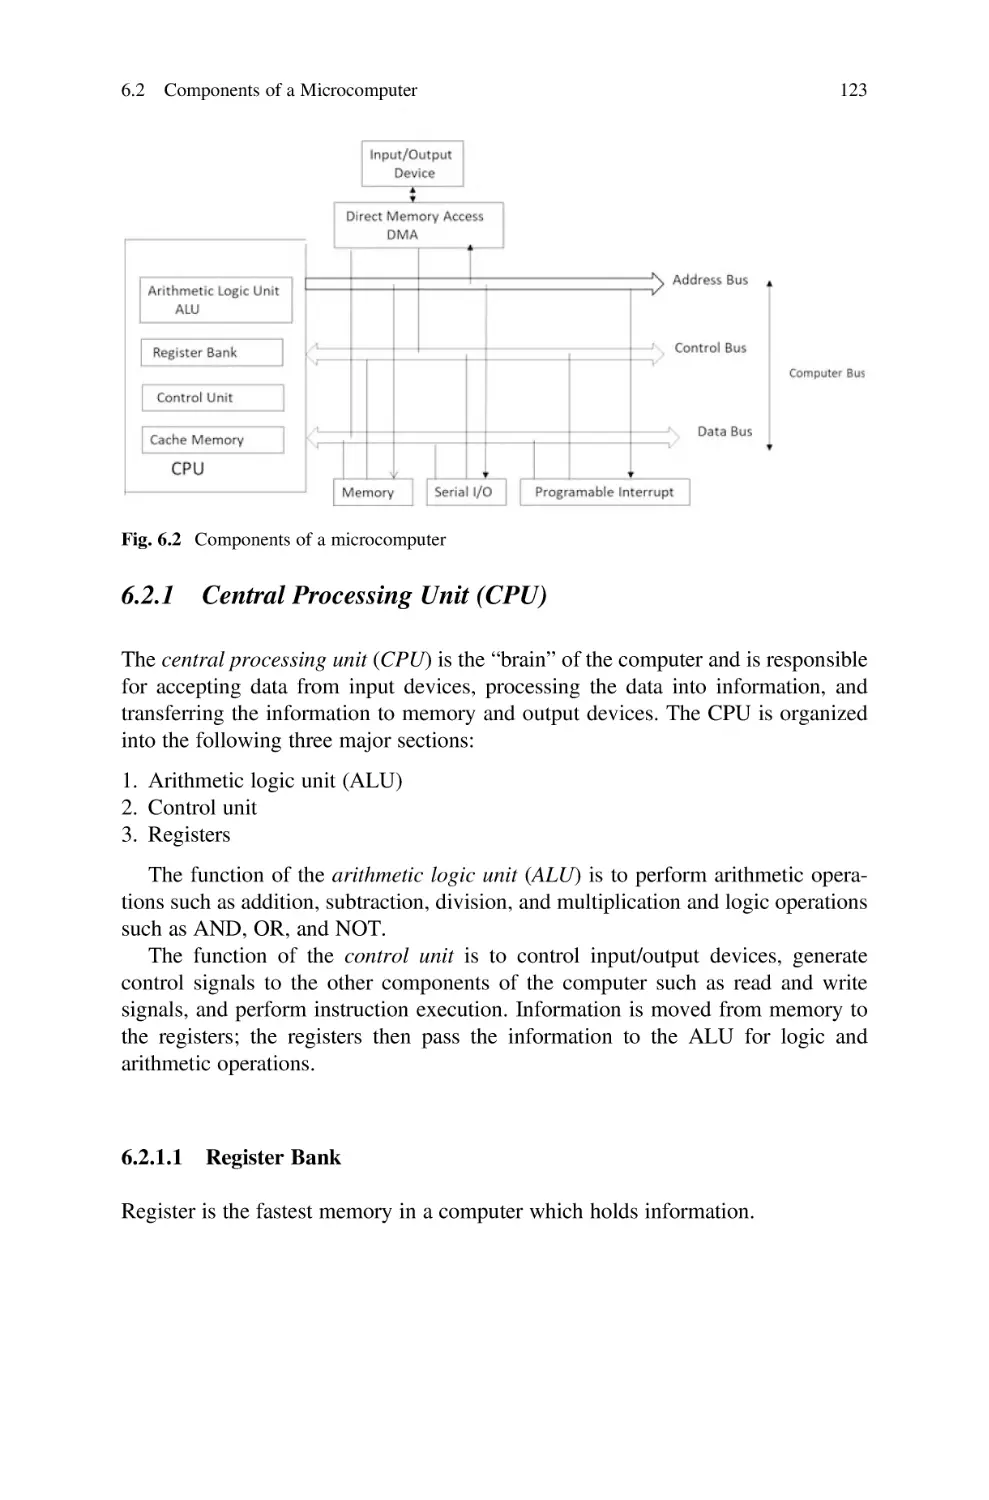 6.2.1 Central Processing Unit (CPU)
6.2.1.1 Register Bank